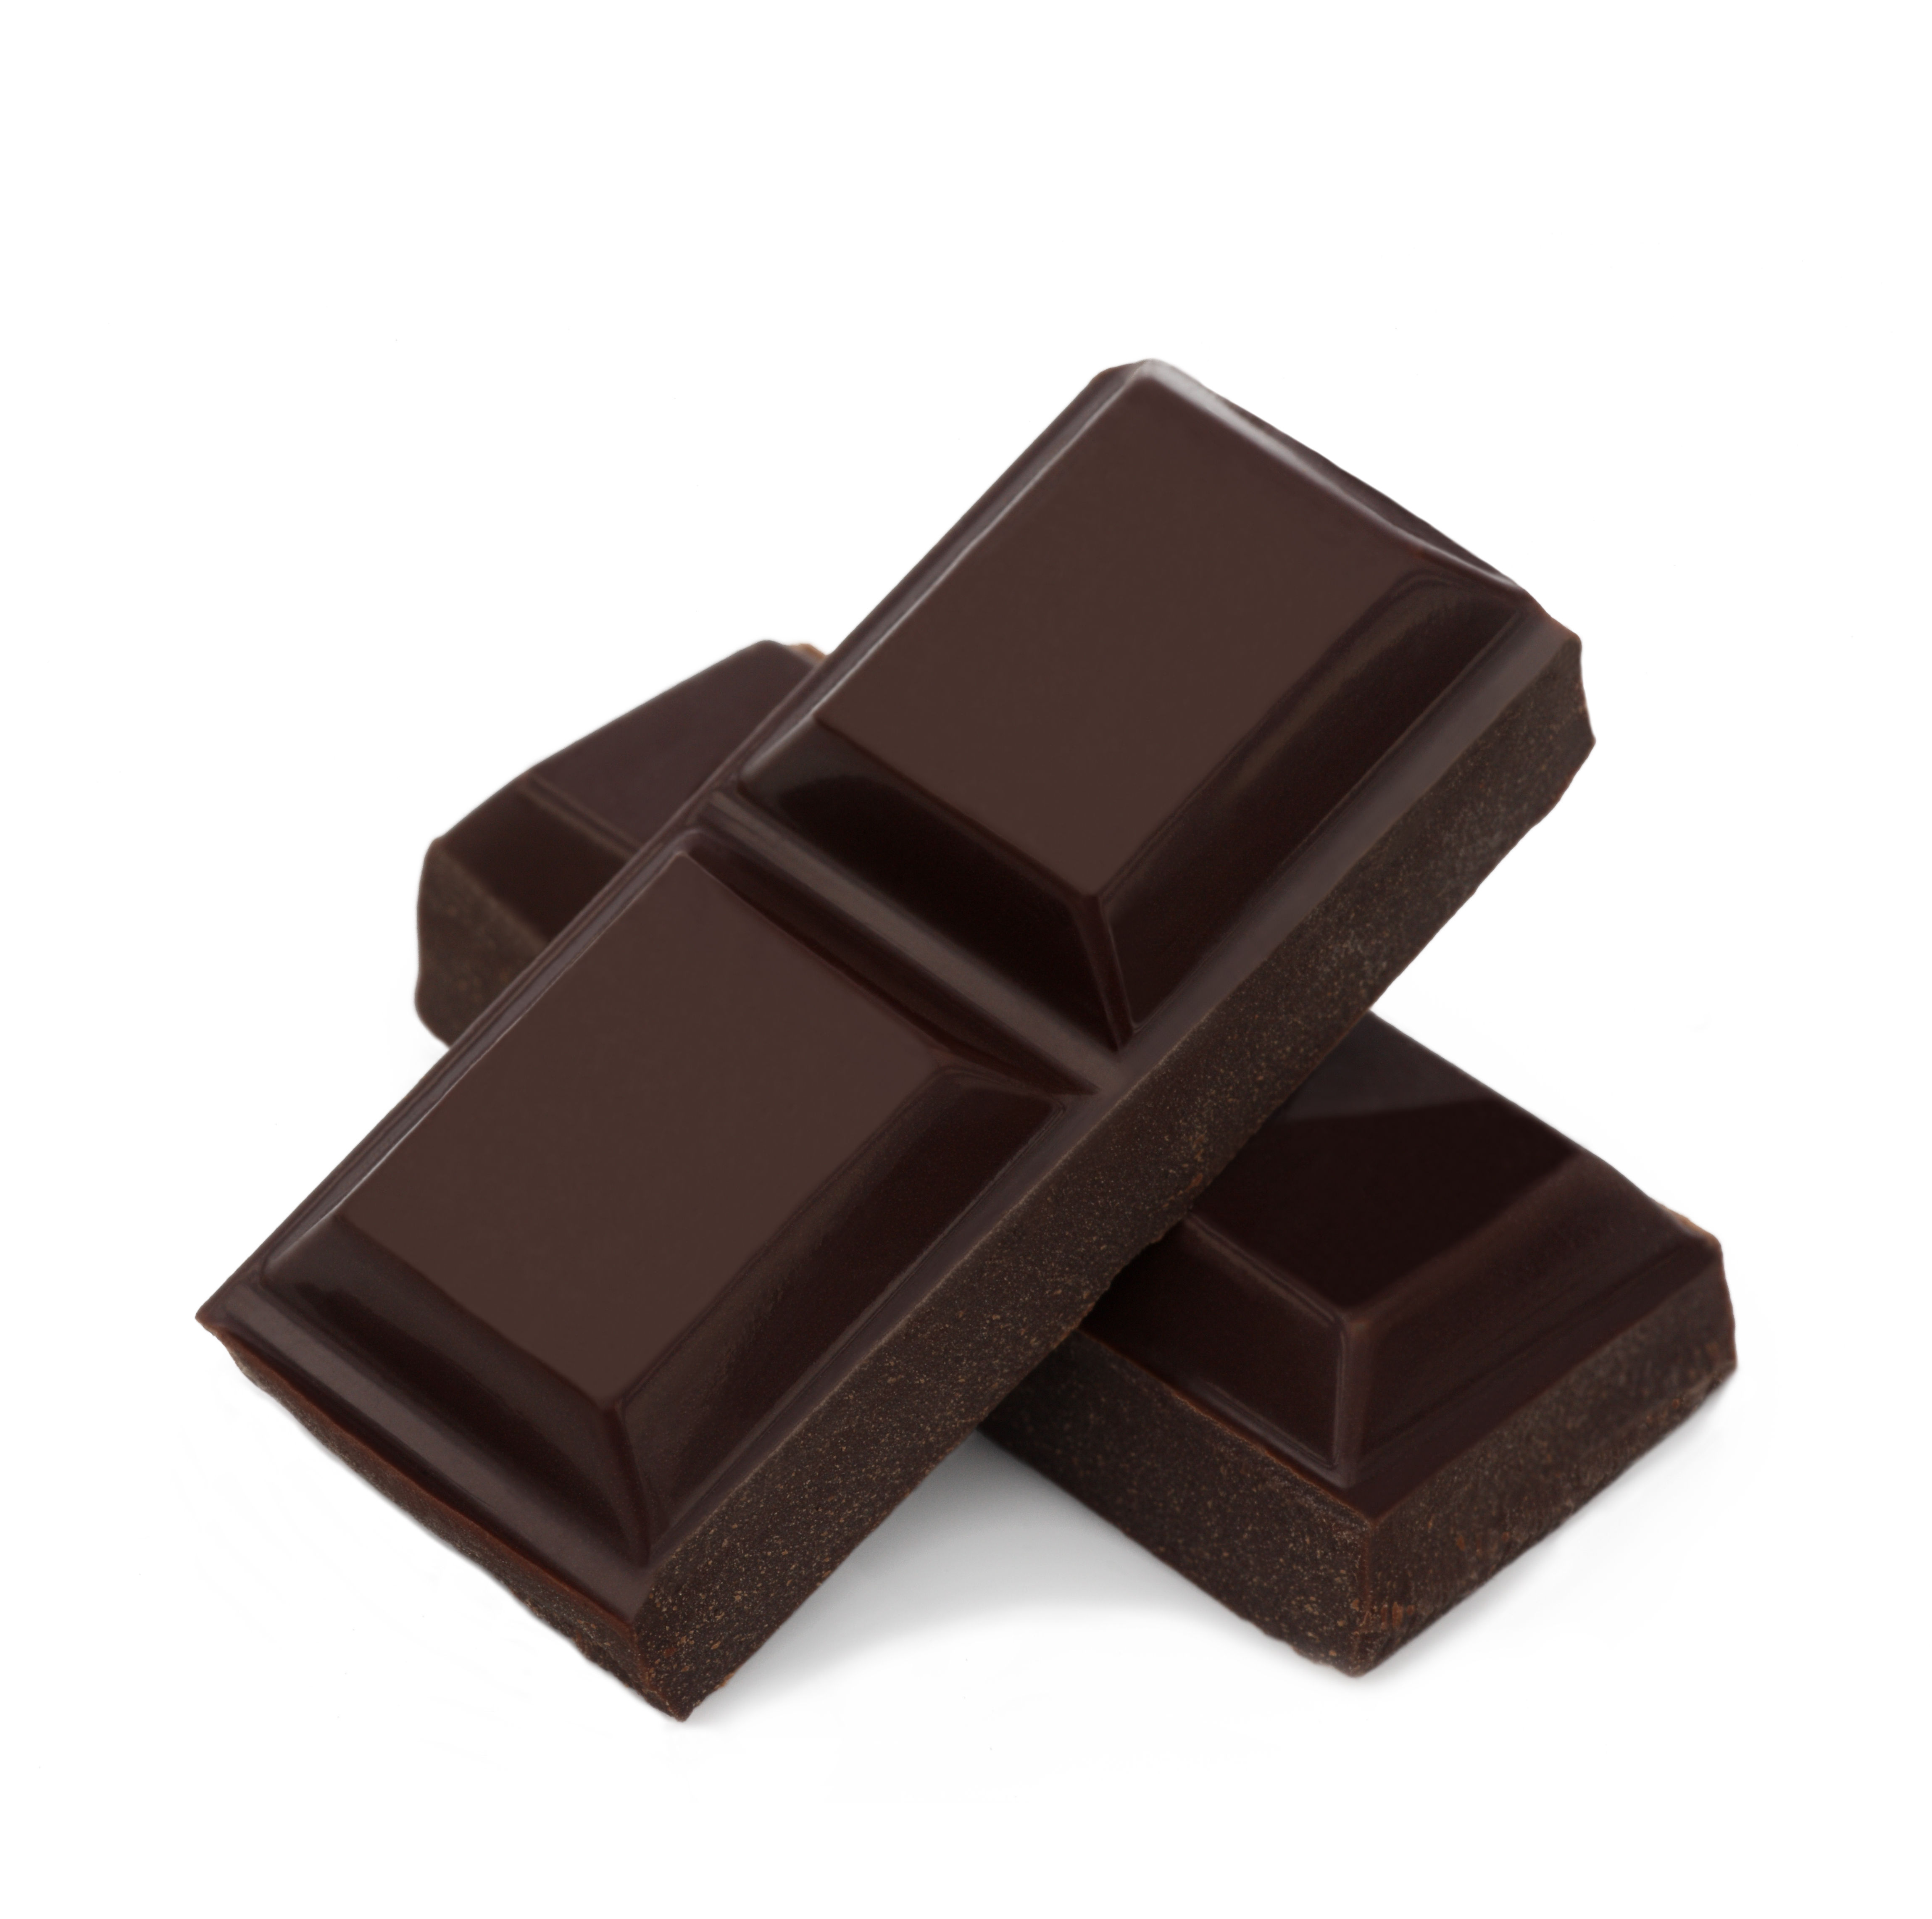 Schokolade enthält eine giftige Chemikalie namens Theobromin